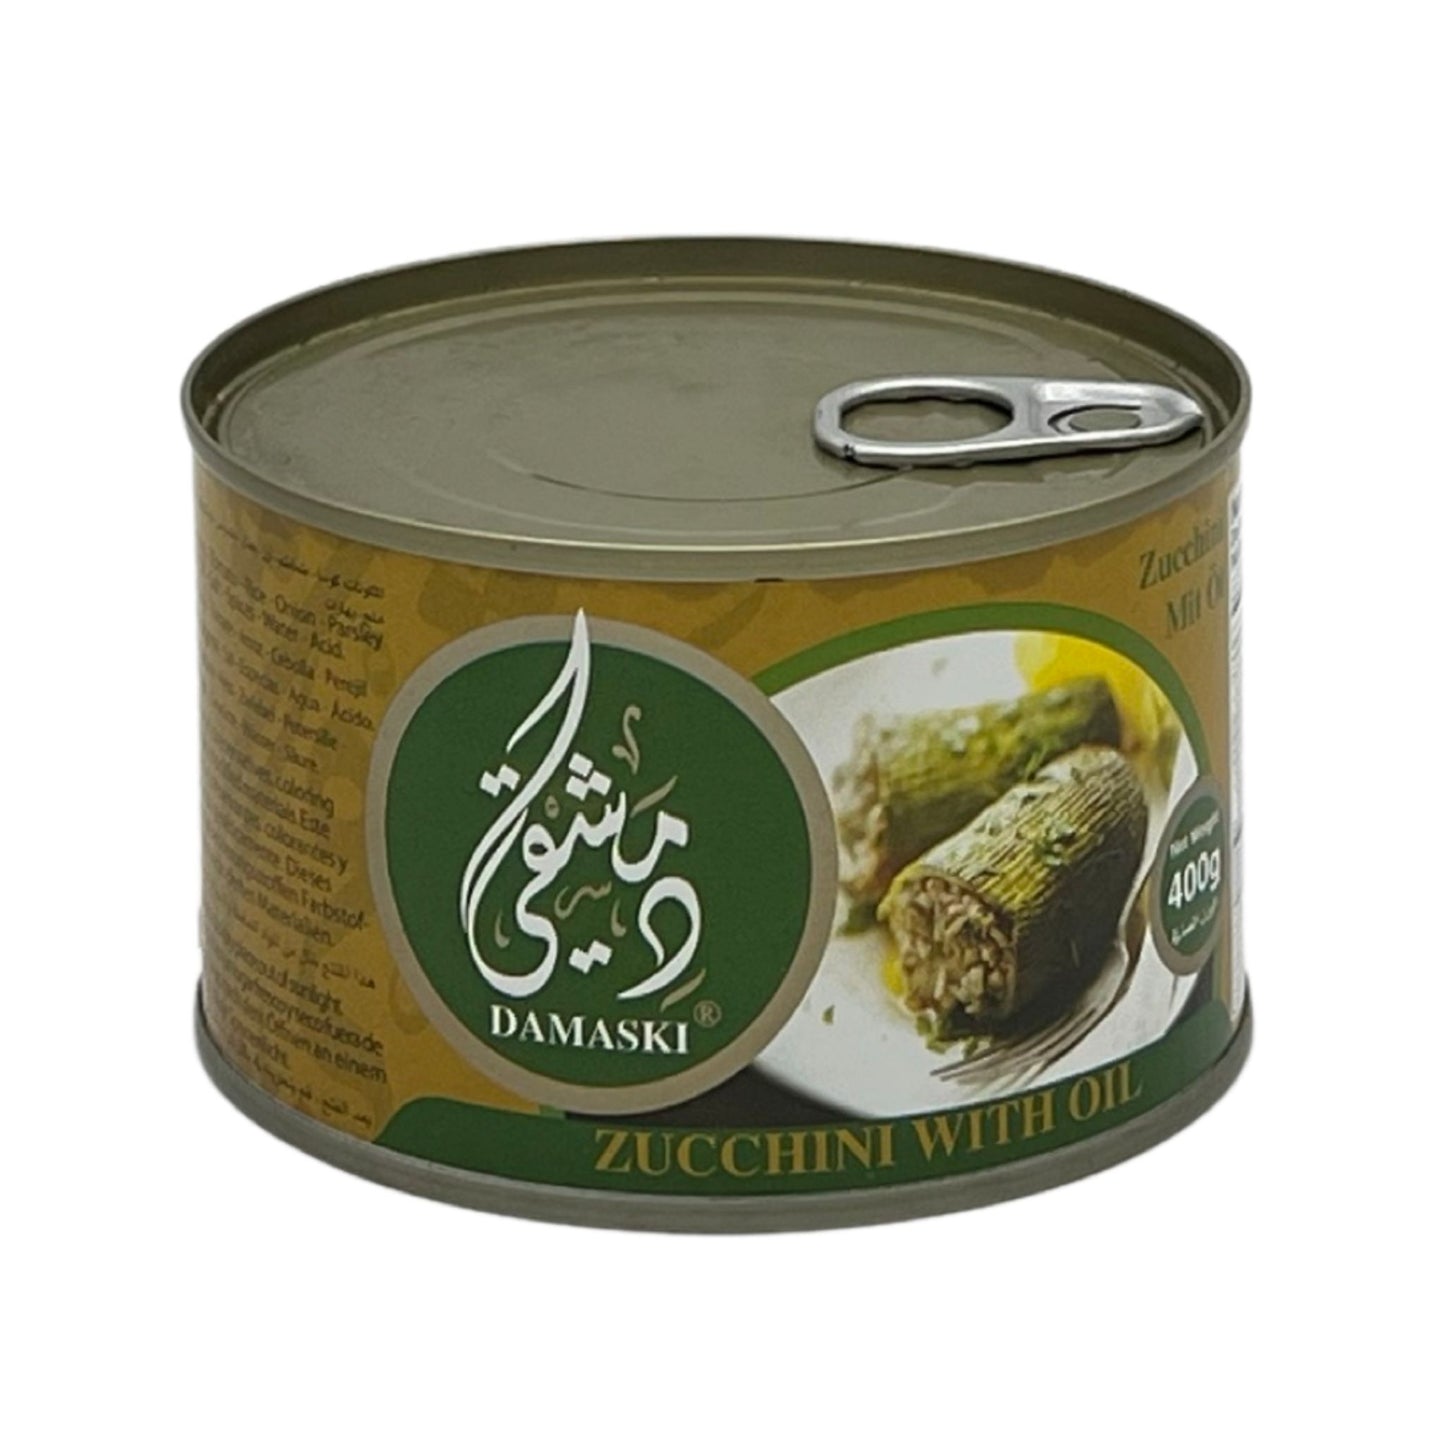 Damaski Zucchini With Oil 400 Grams